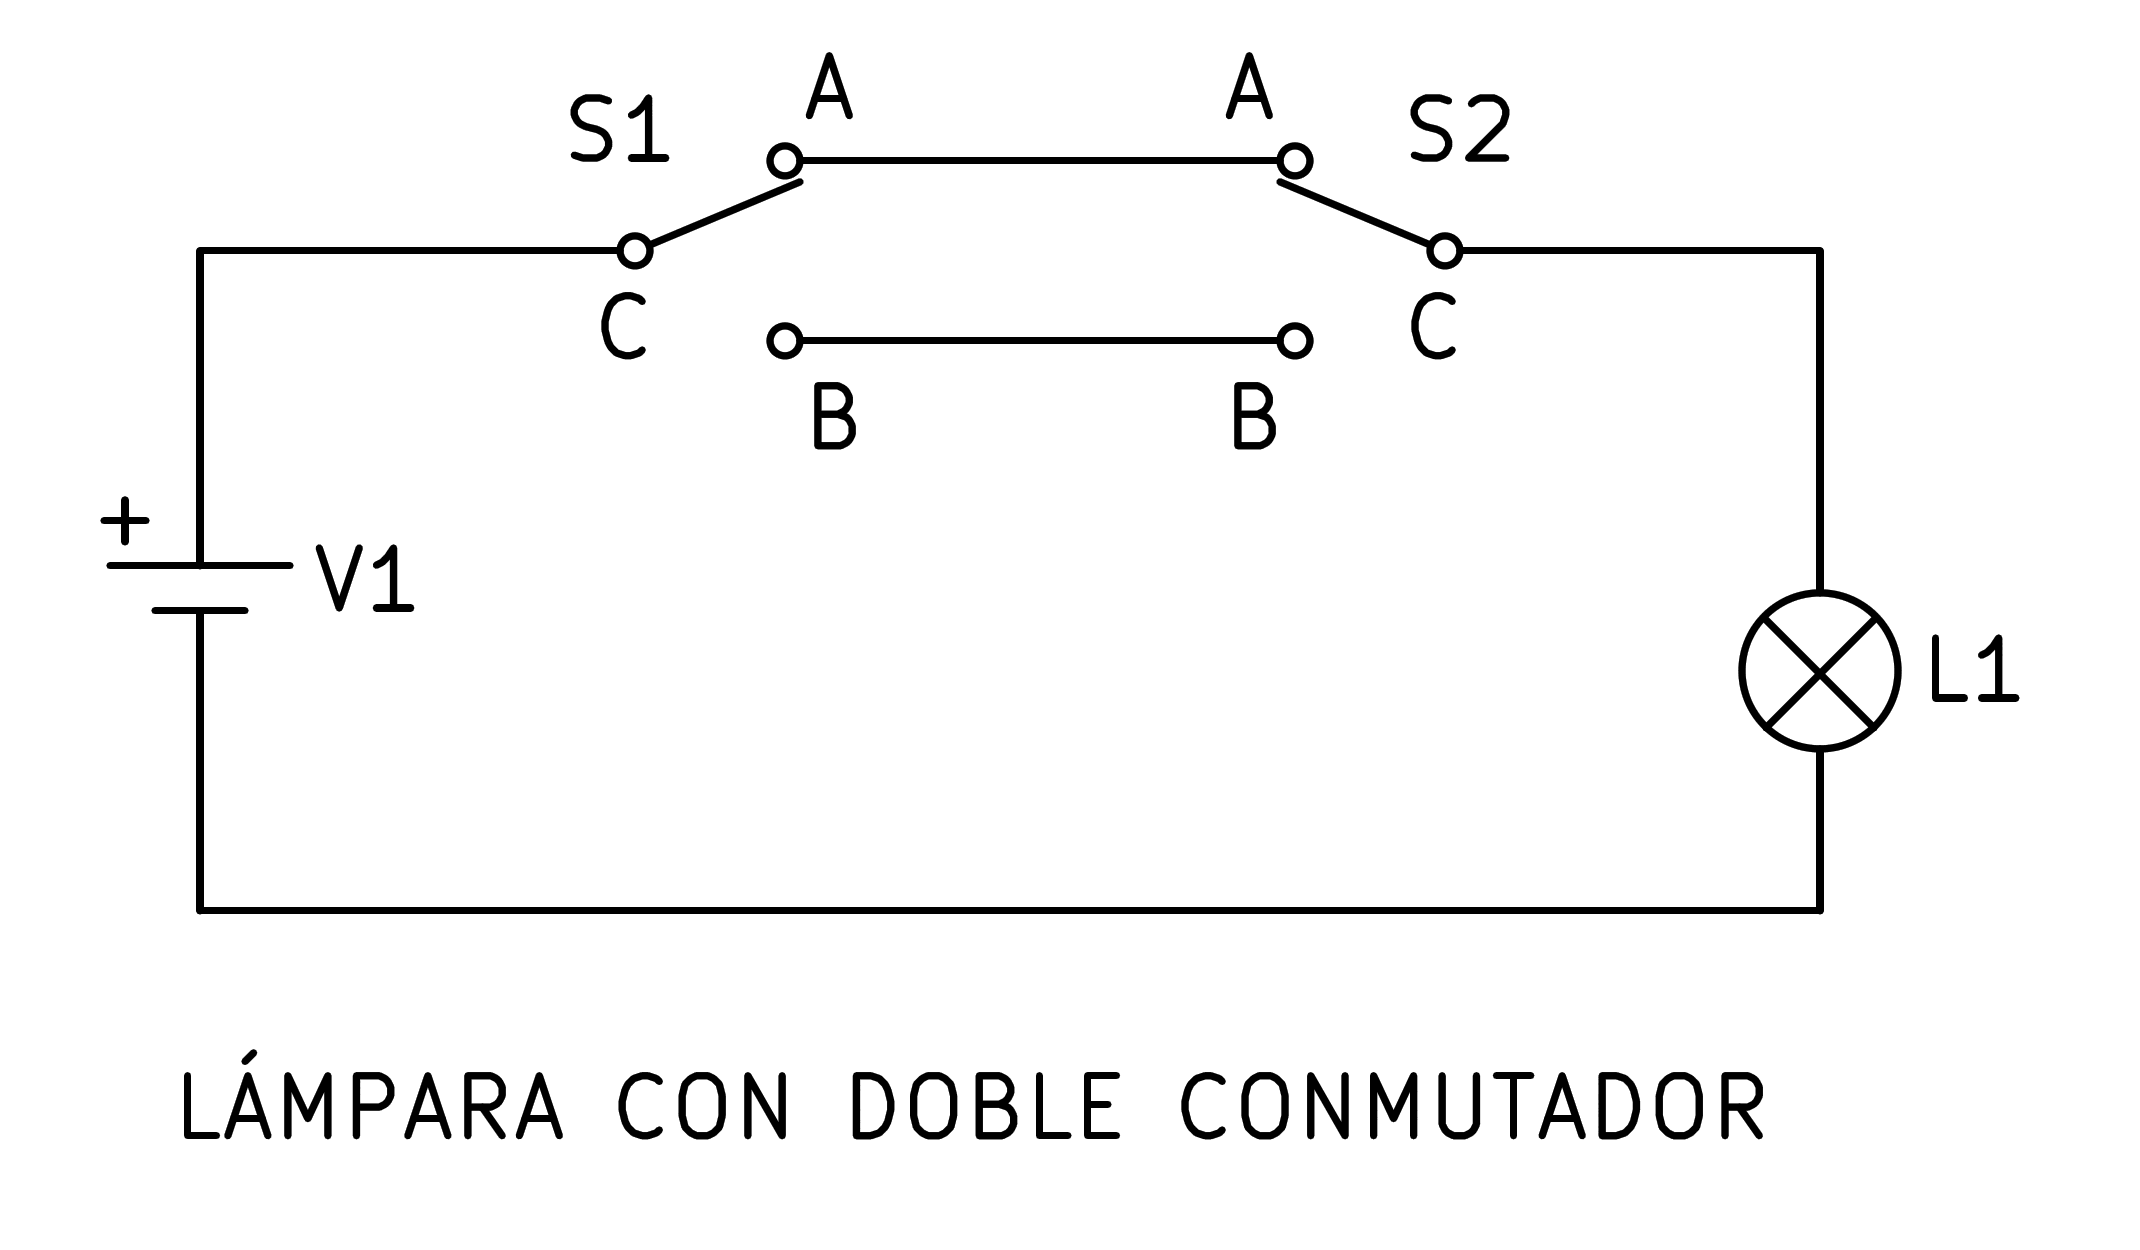 _images/electric-bornas-conmutador-doble.png